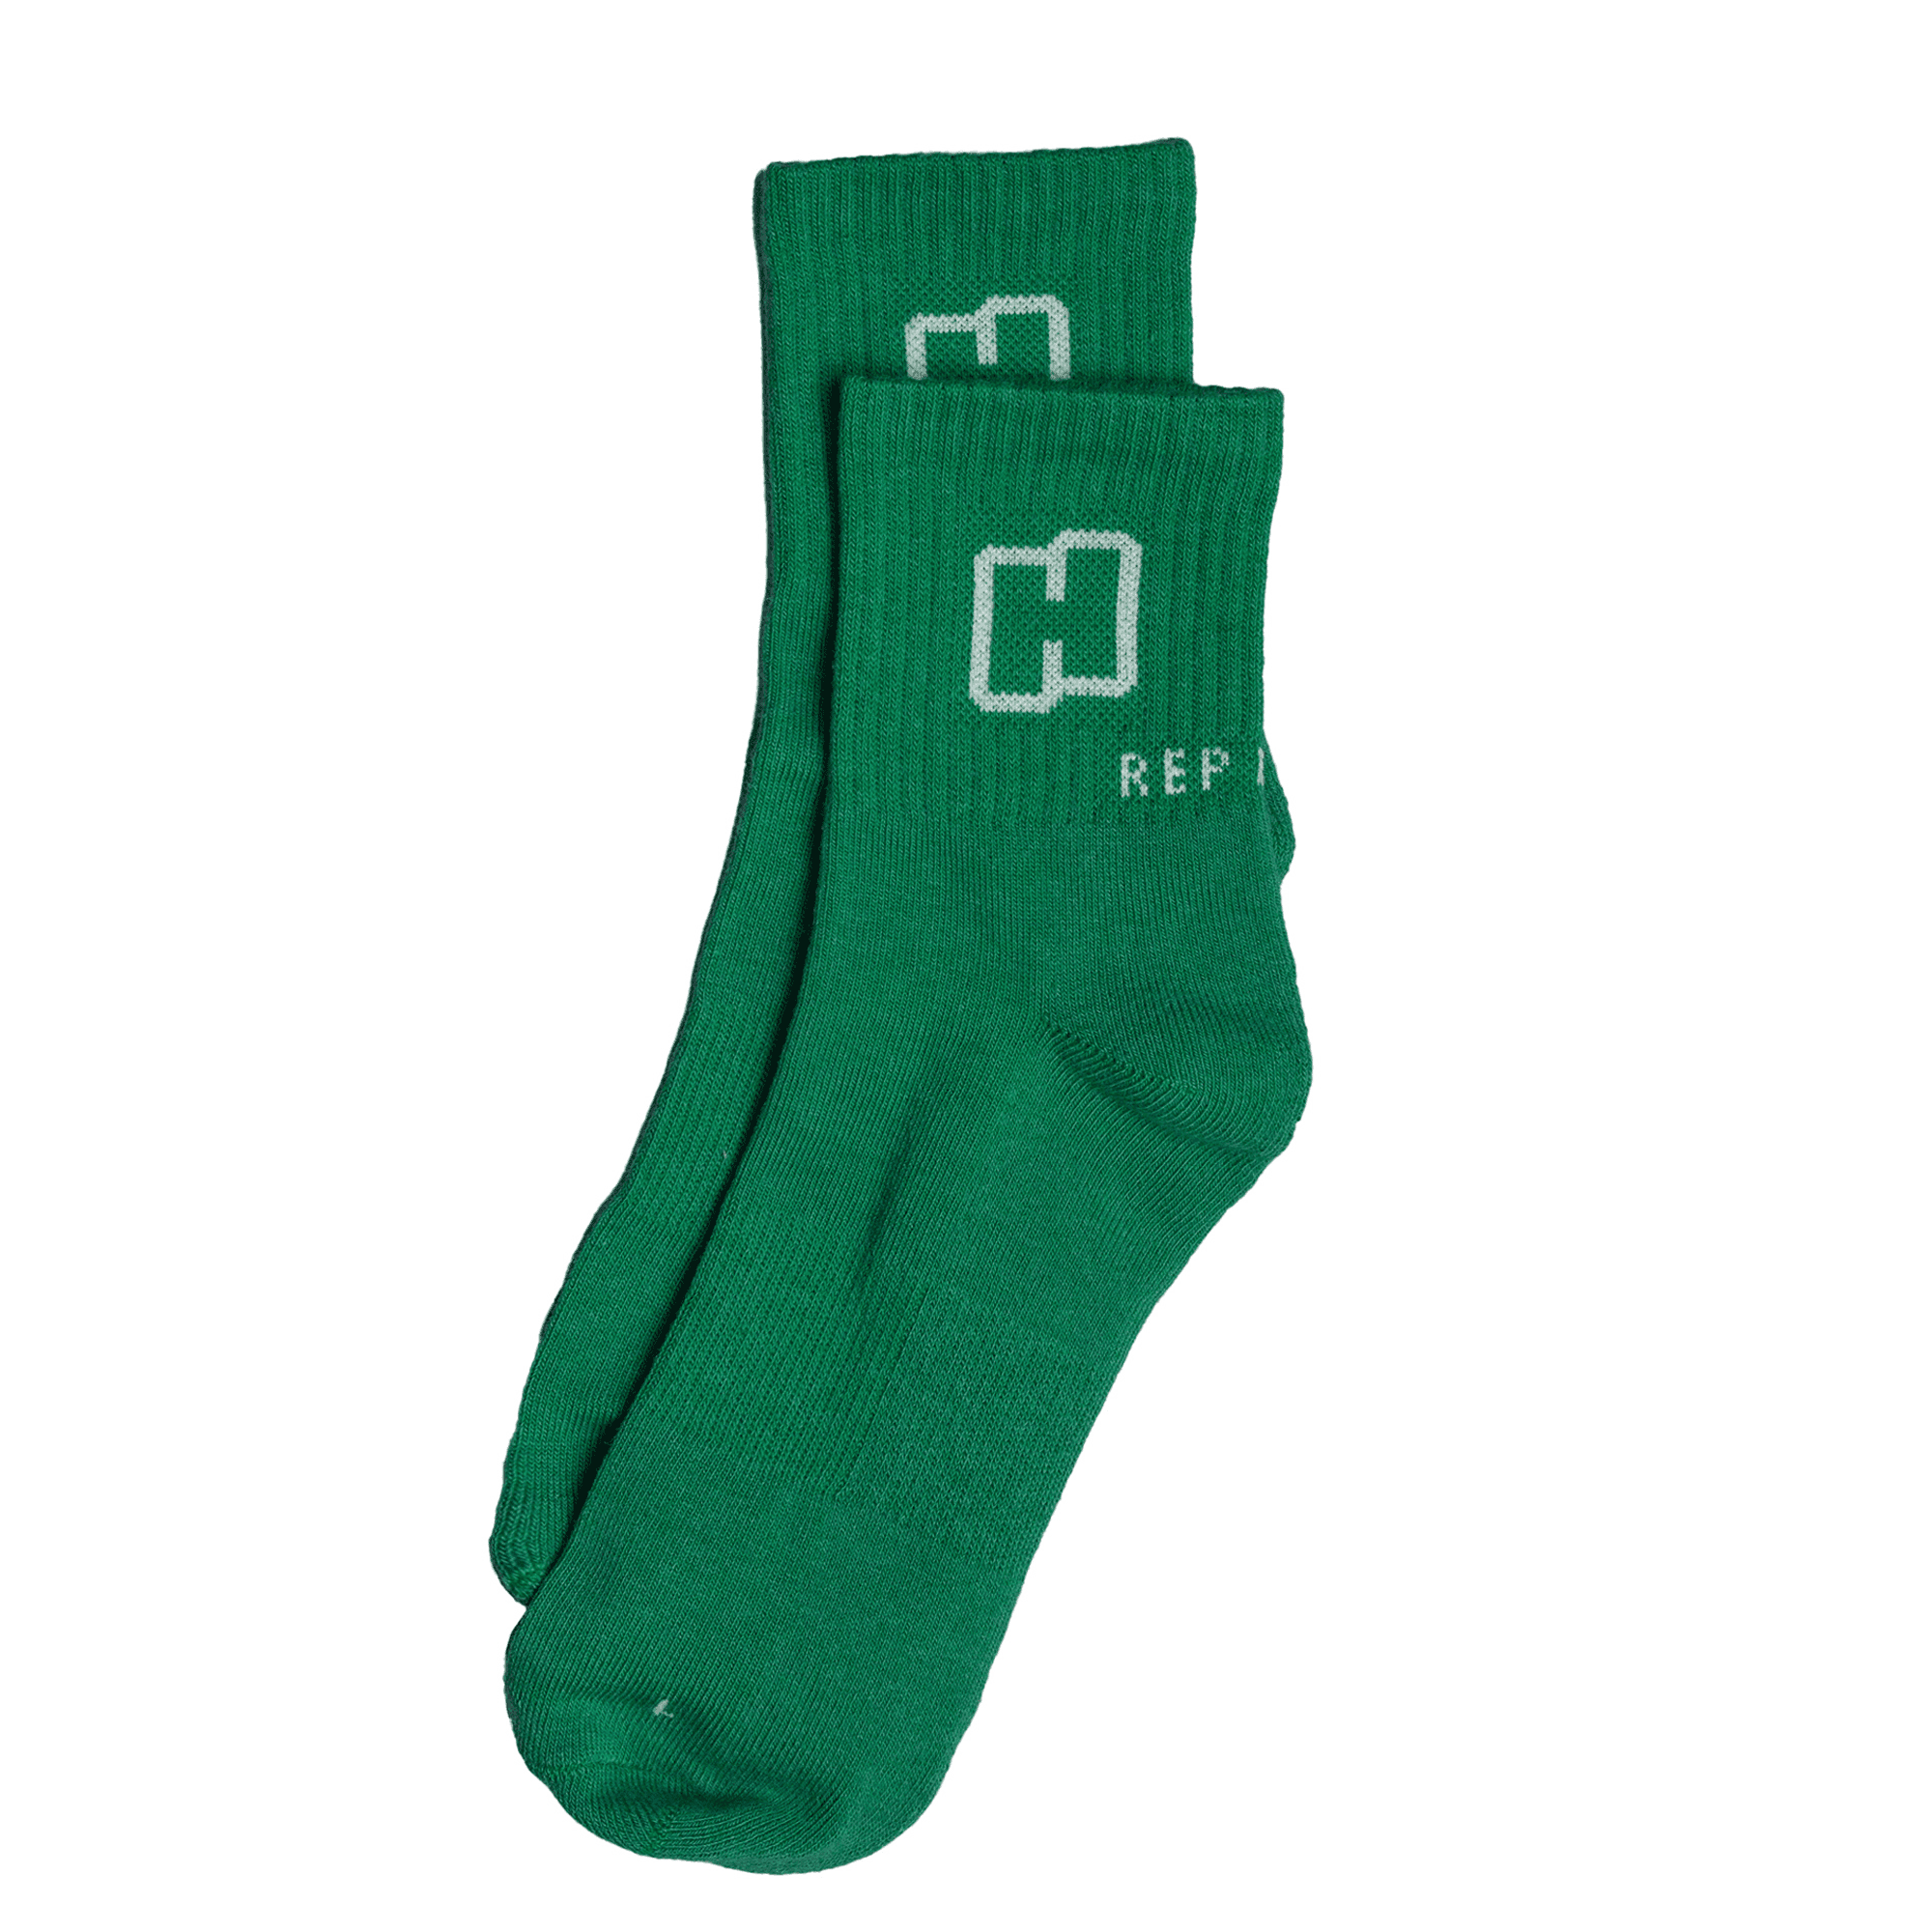 H103 Socks - Green